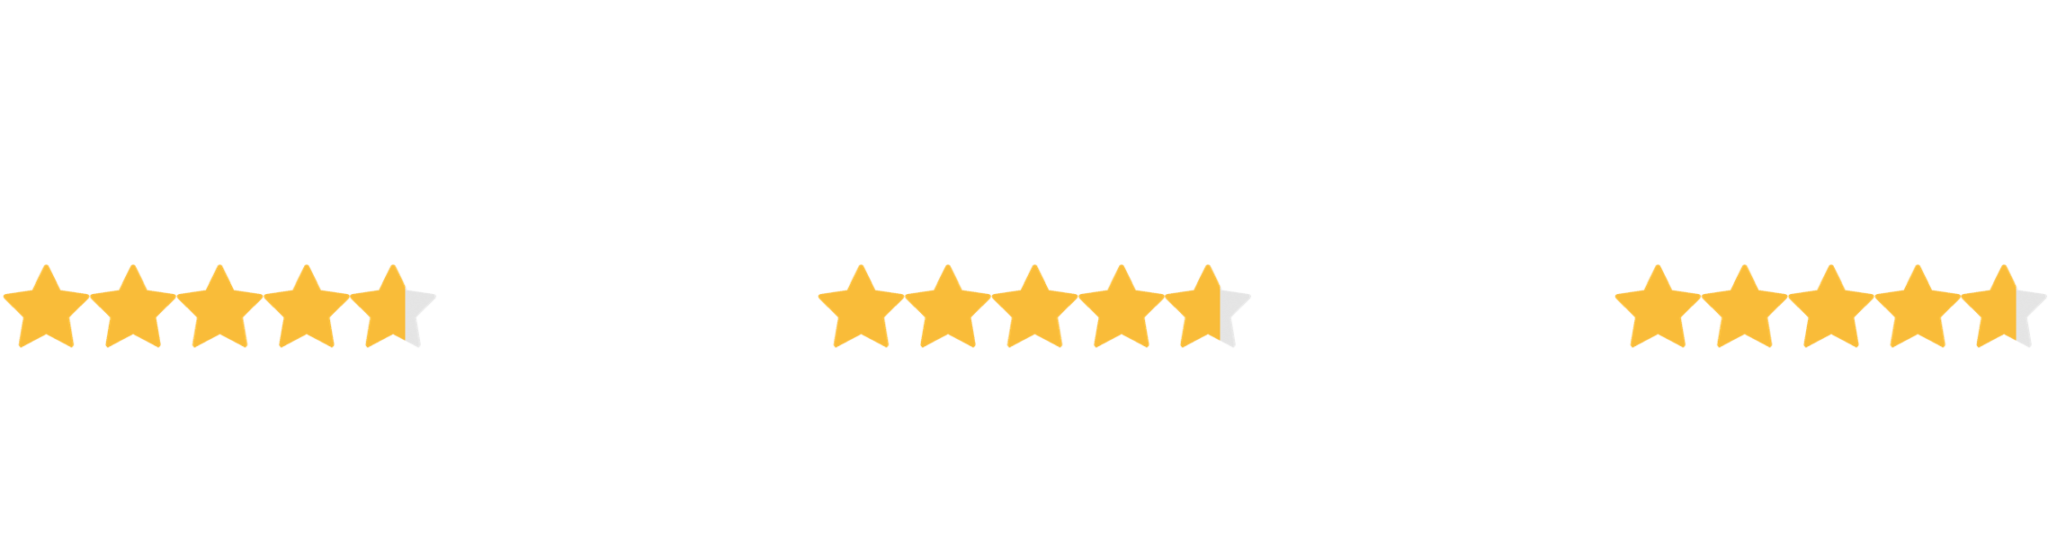 Reviews-Scores